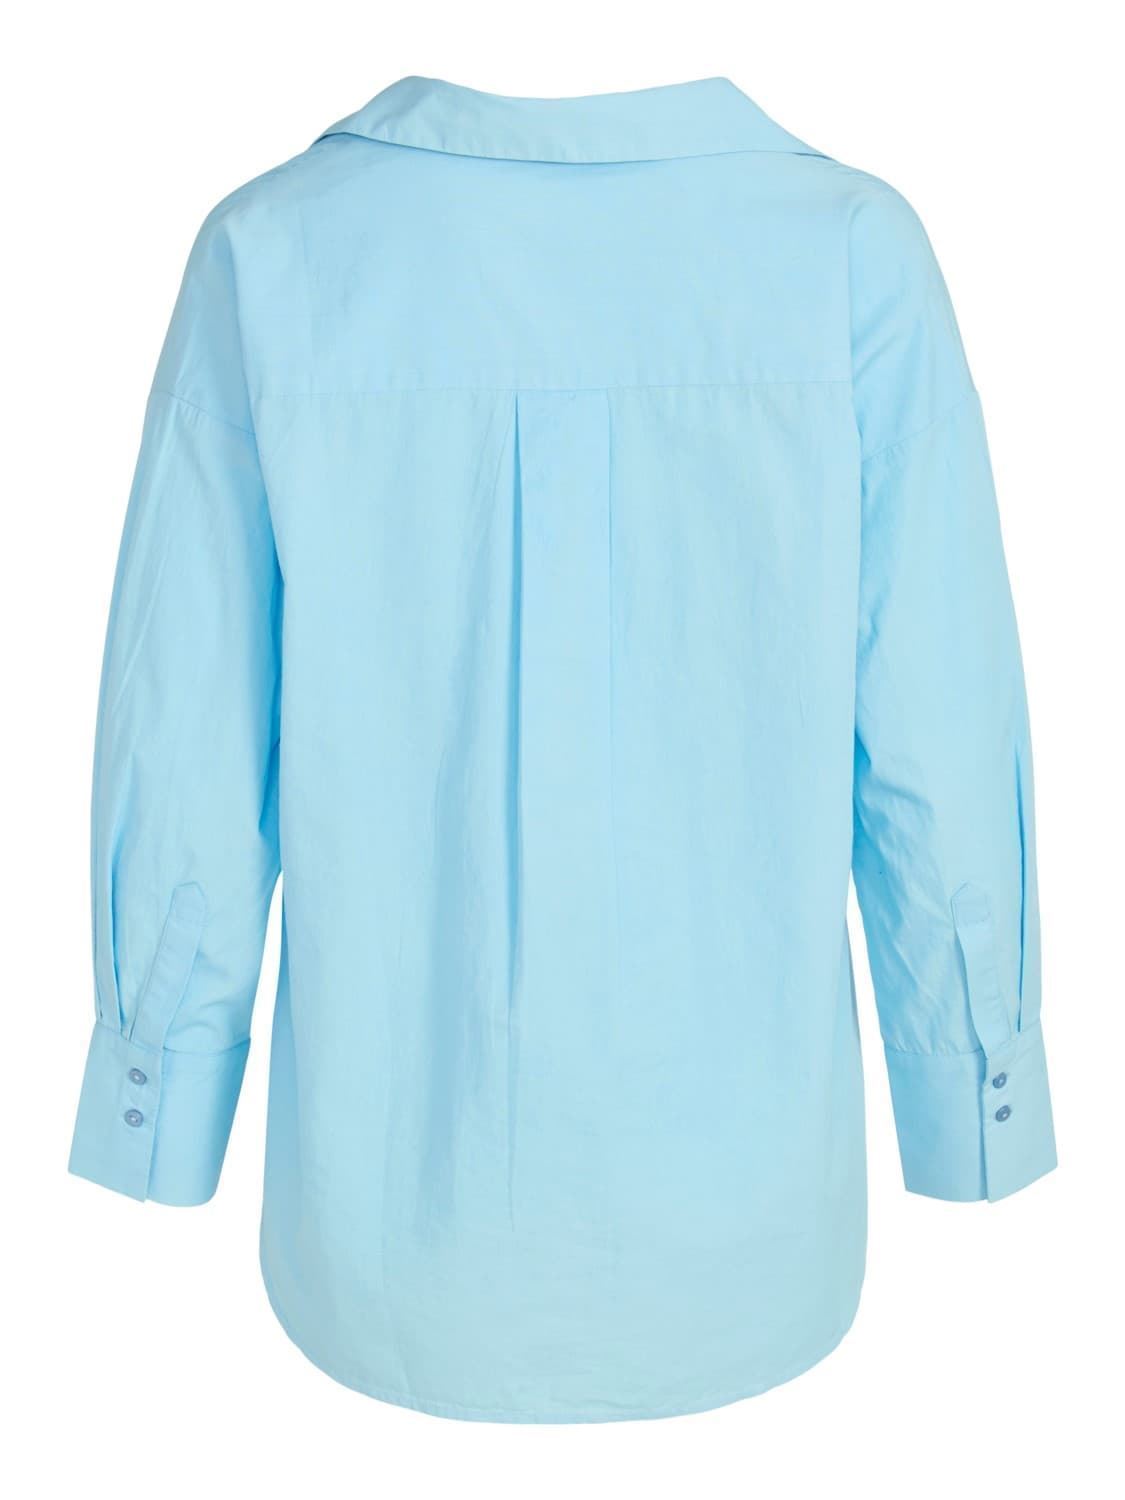 Camisa manga larga Vigamis azul - Imagen 2